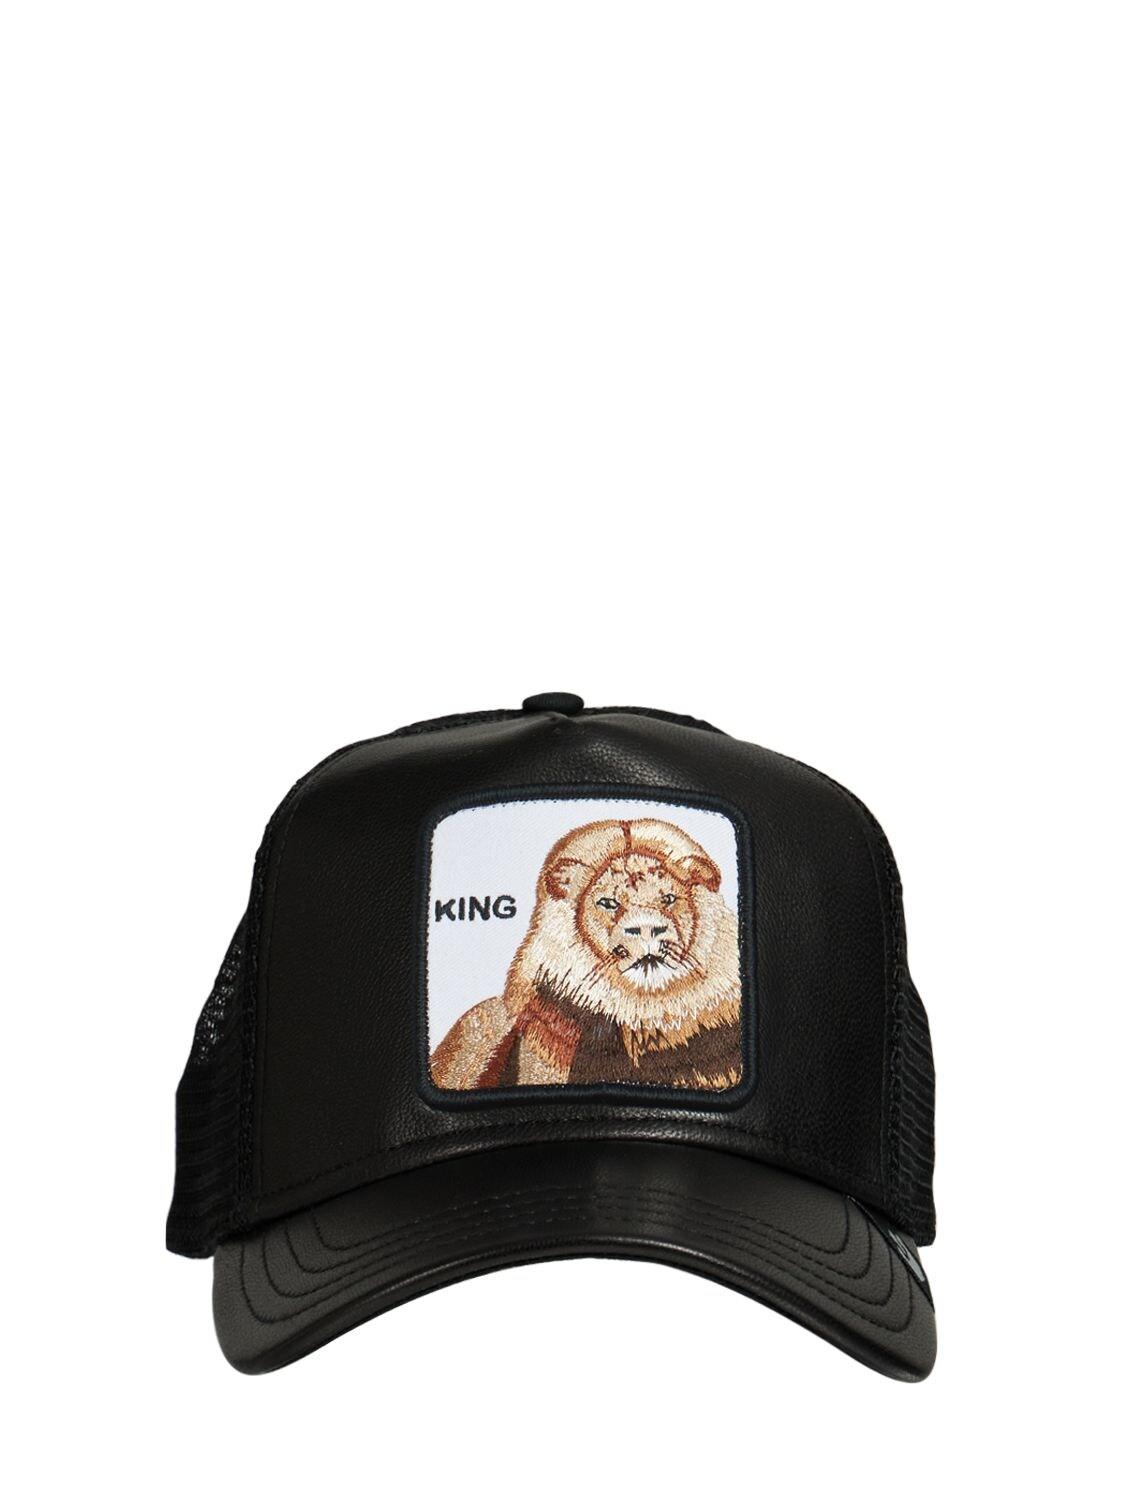 Goorin Bros Mesh Cap Animal Farm King Lion The Best Black Leather Trucker Hat 